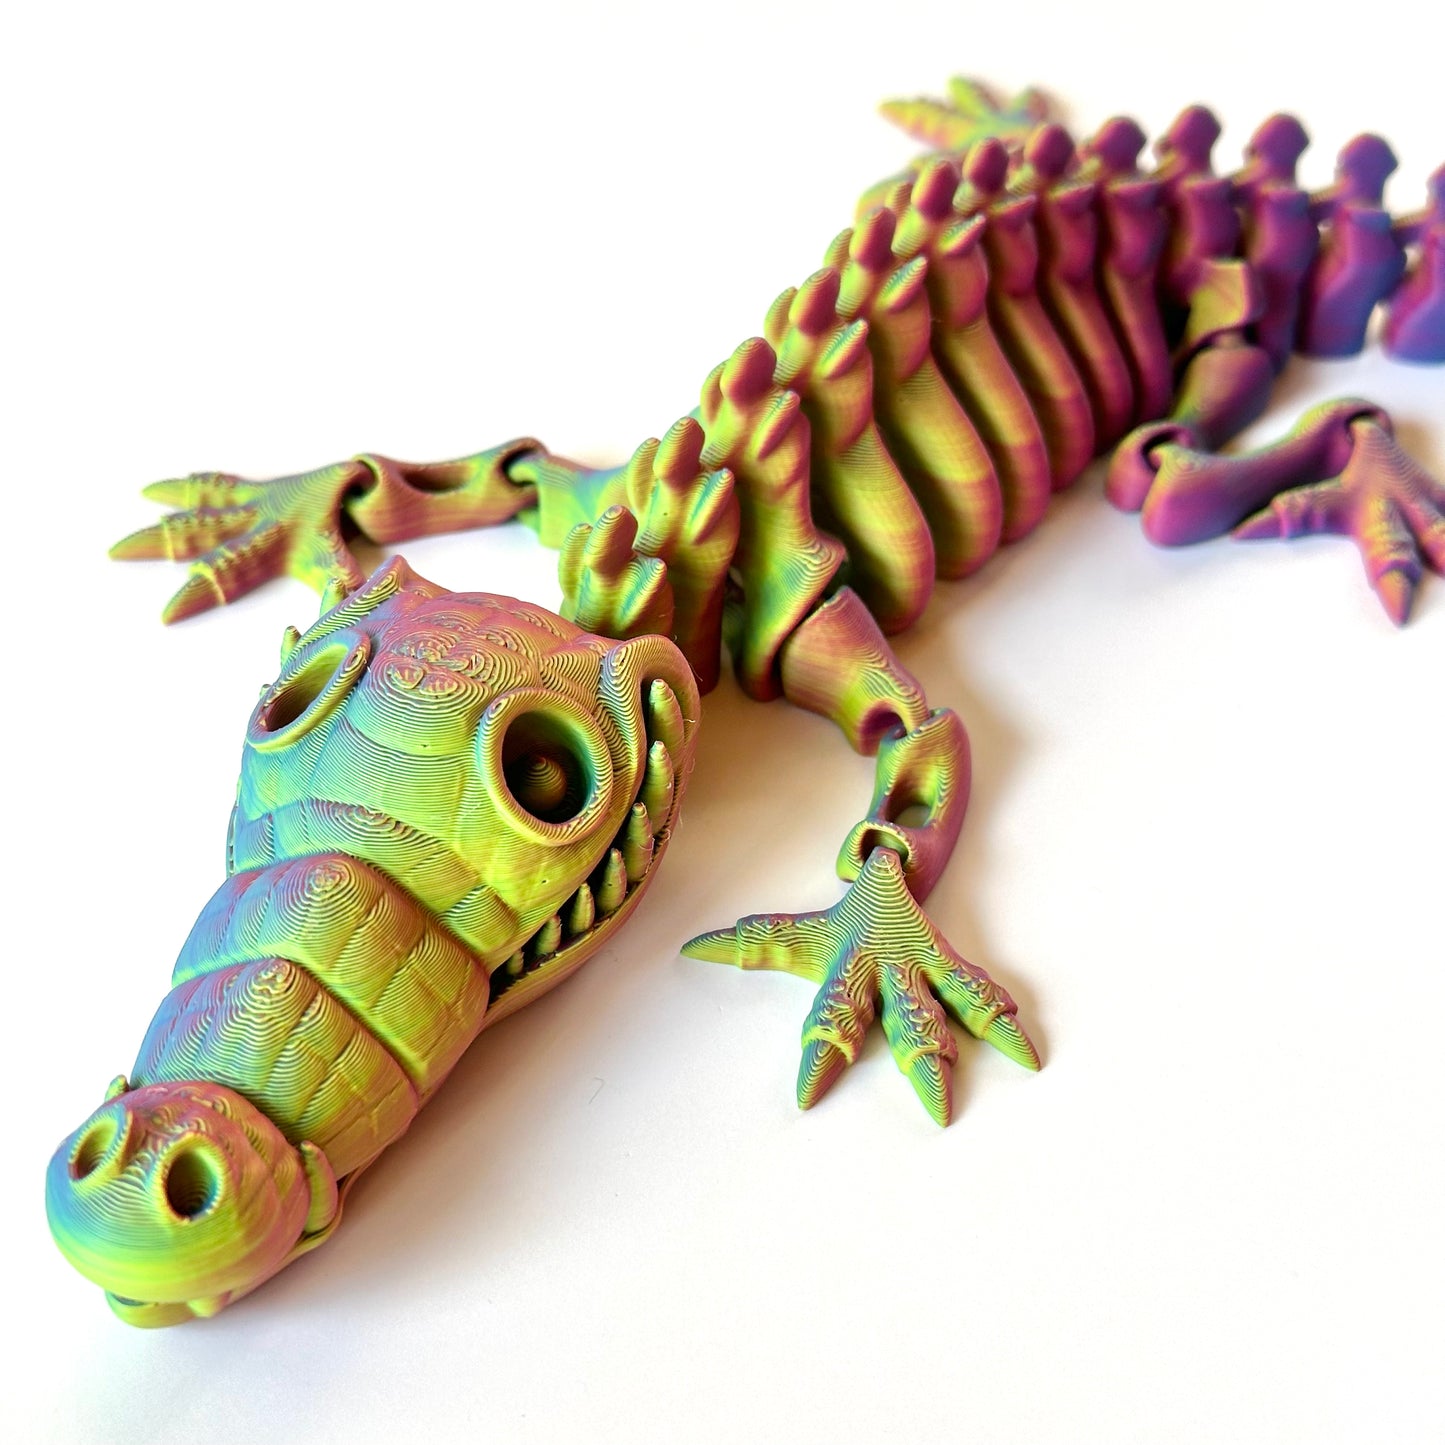 Flexible Crocodile - 3D Printed Articulating